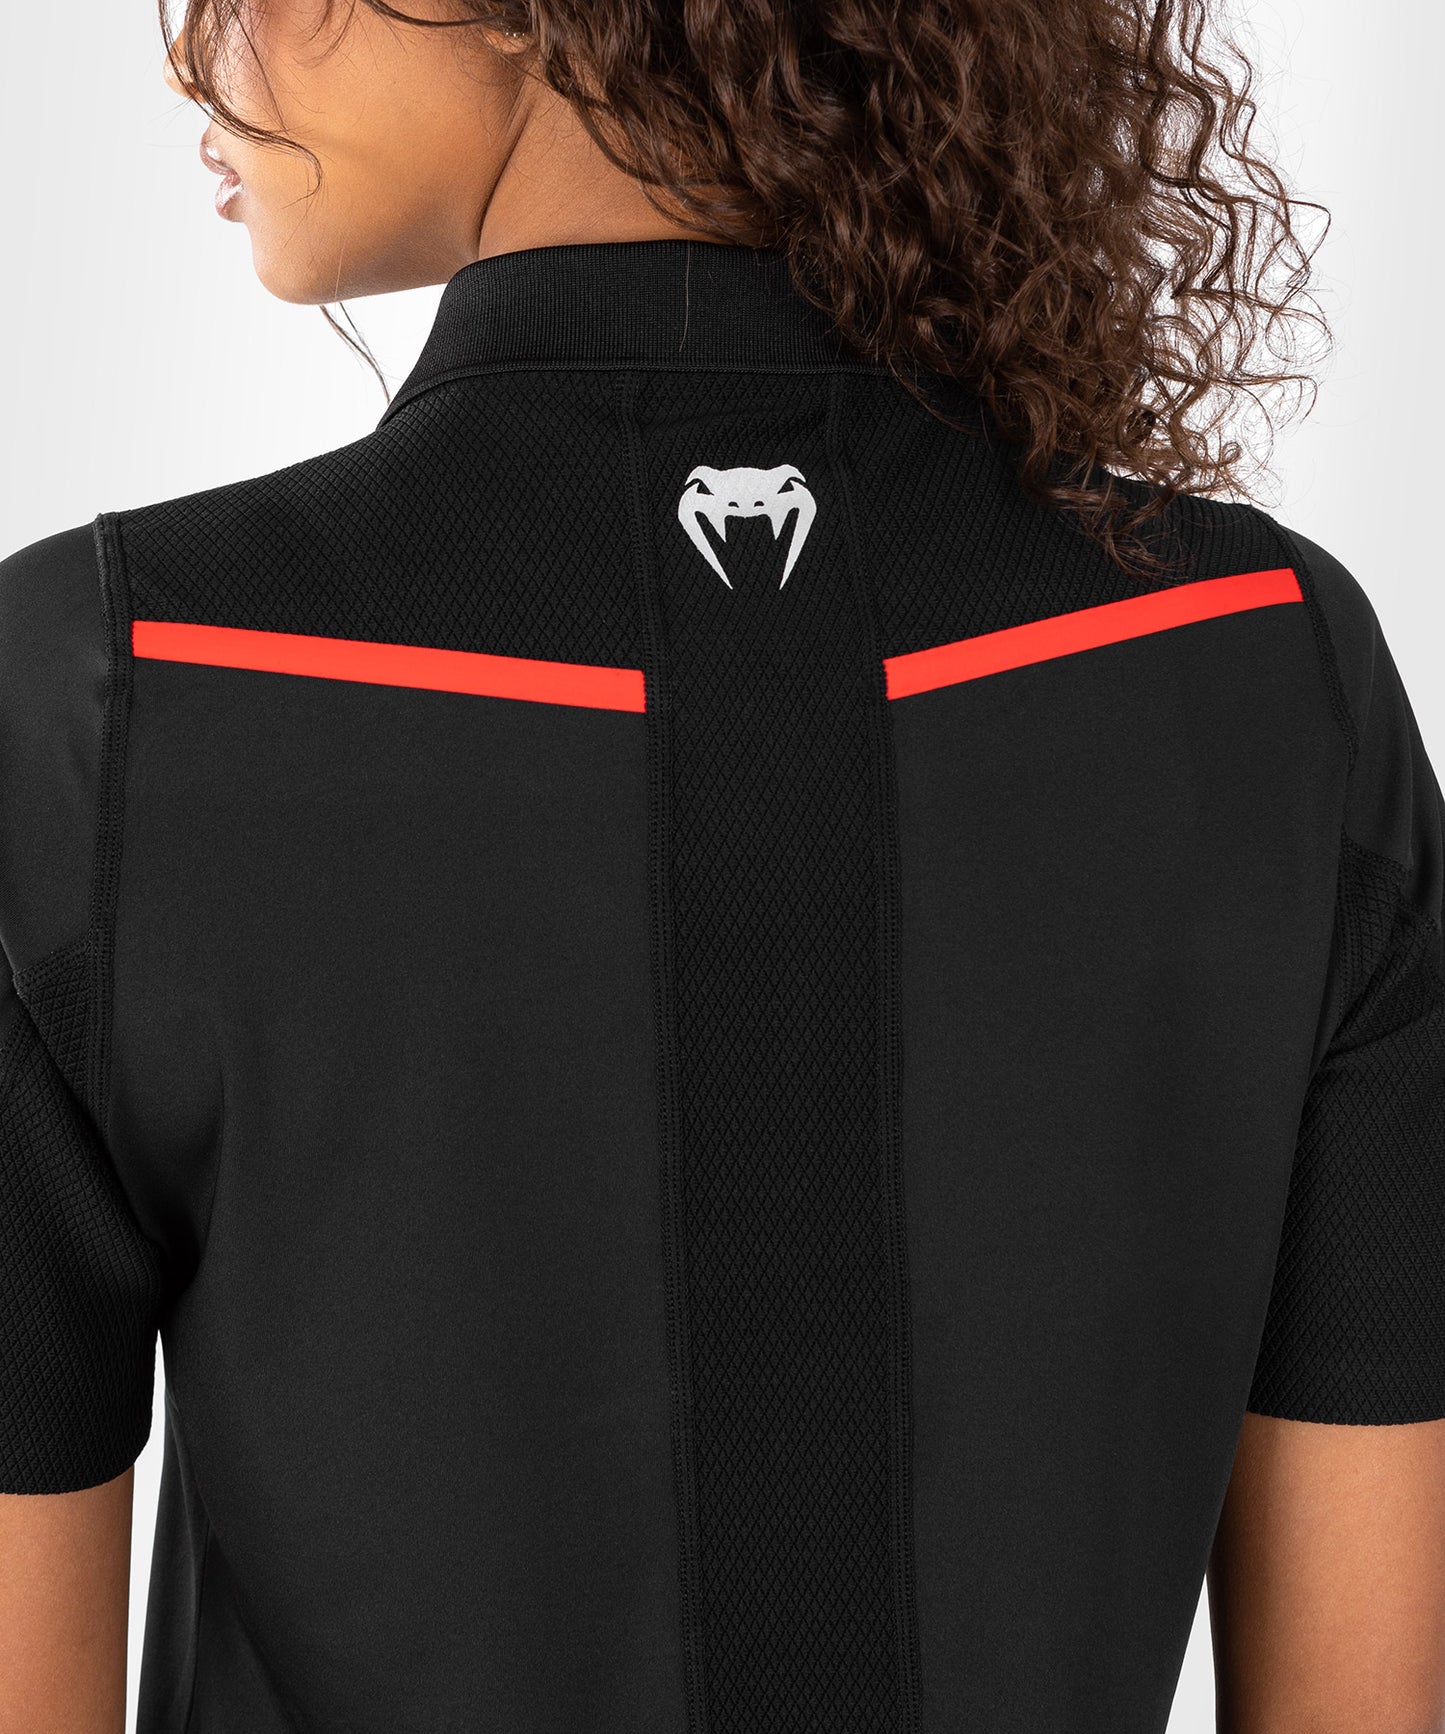 UFC Venum Performance Institute 2.0  Women’s Performance Polo Shirt - Black/Red